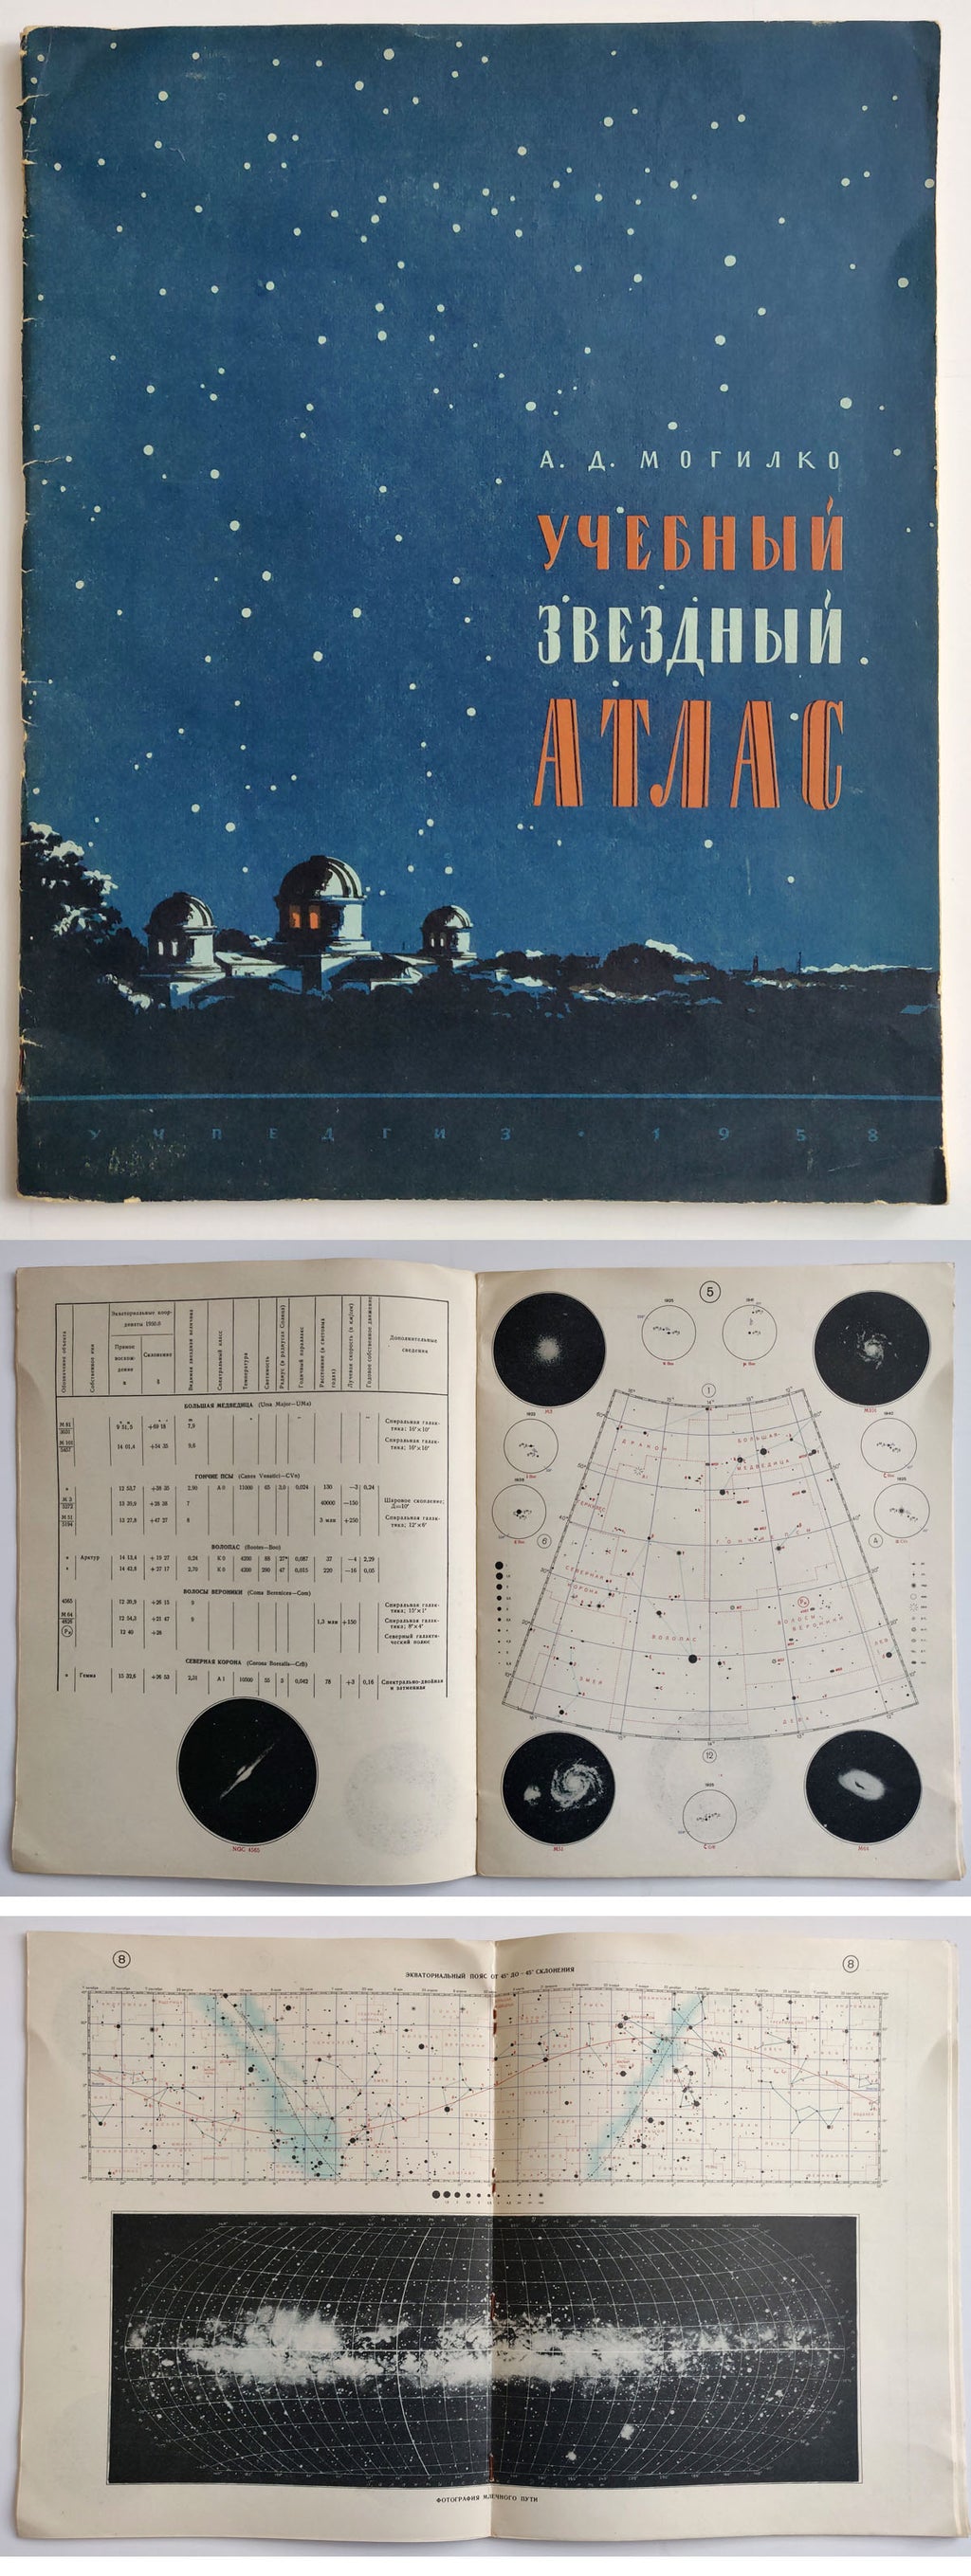 (Celestial - Space) "Educational Astronomical Atlas"